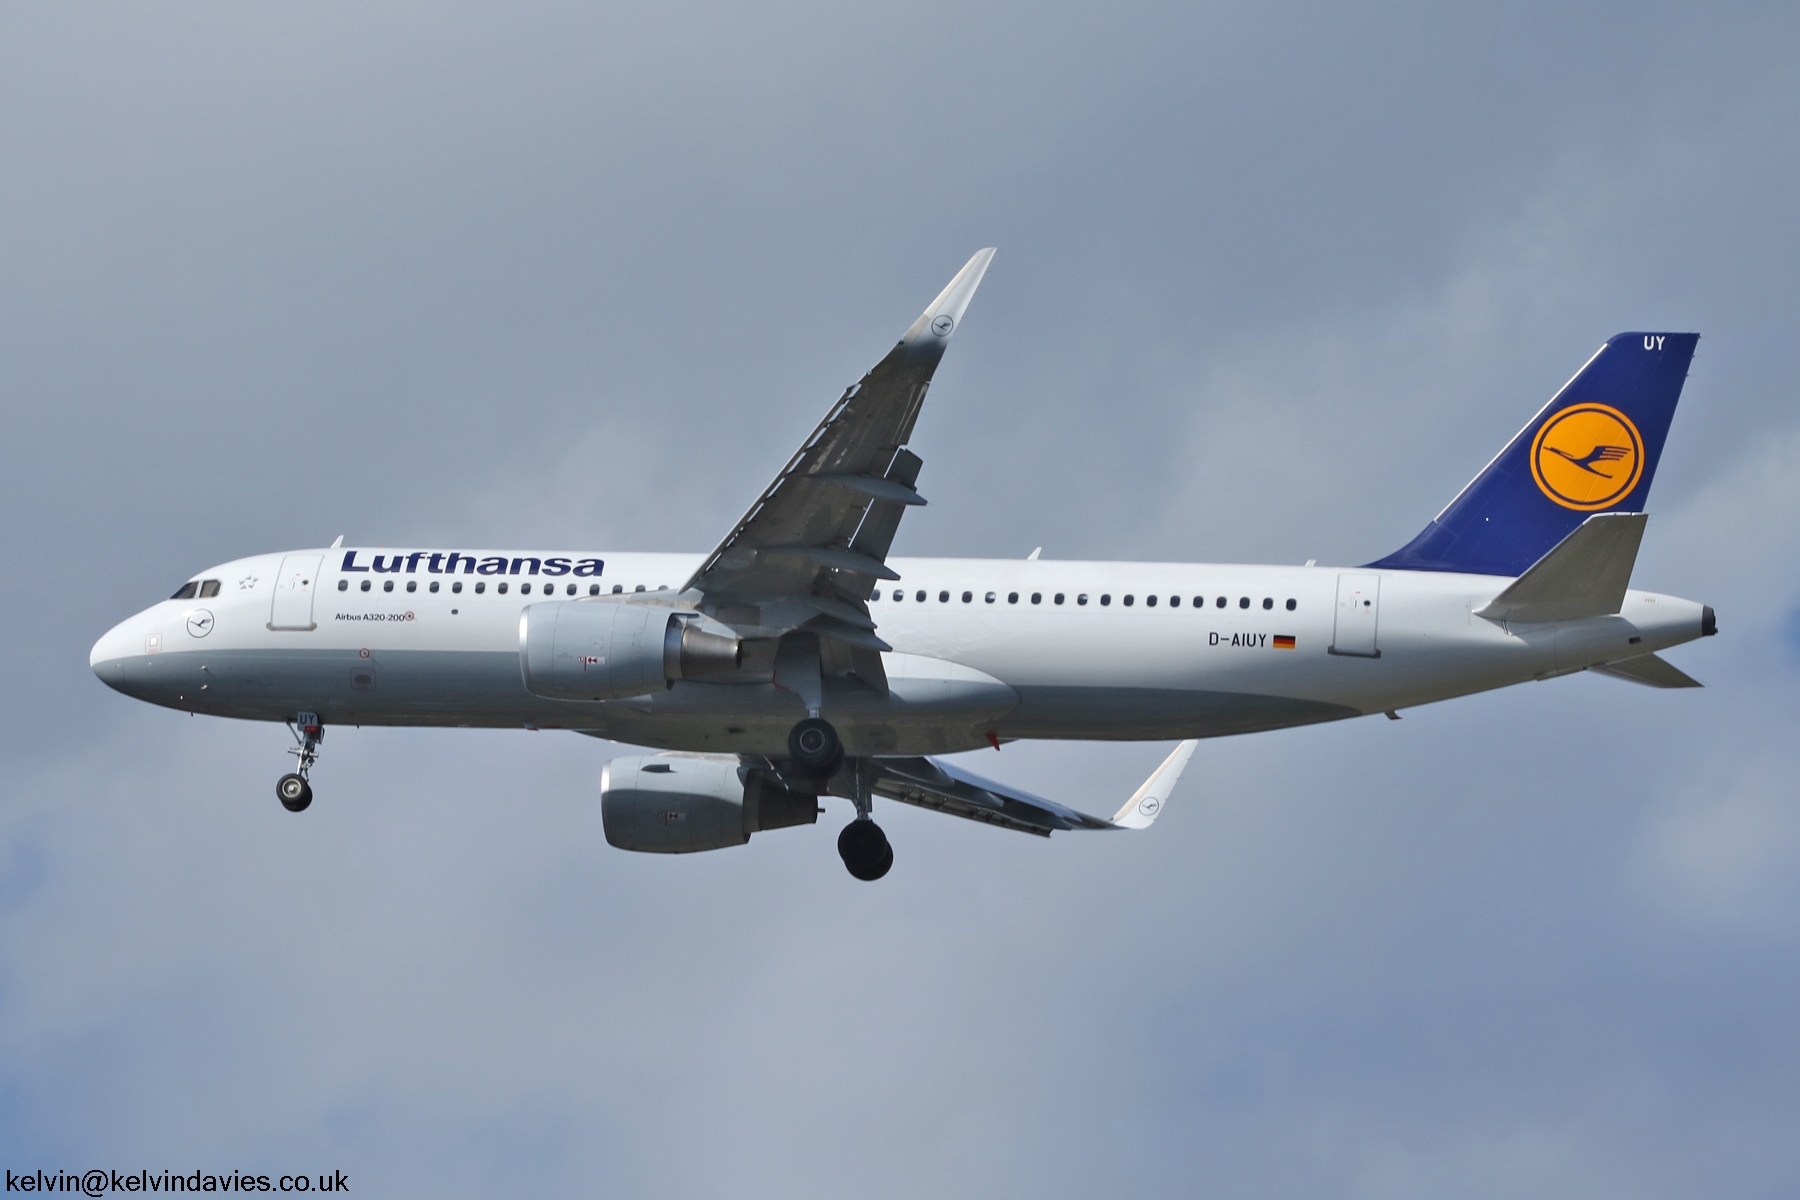 Lufthansa A320 D-AIUY